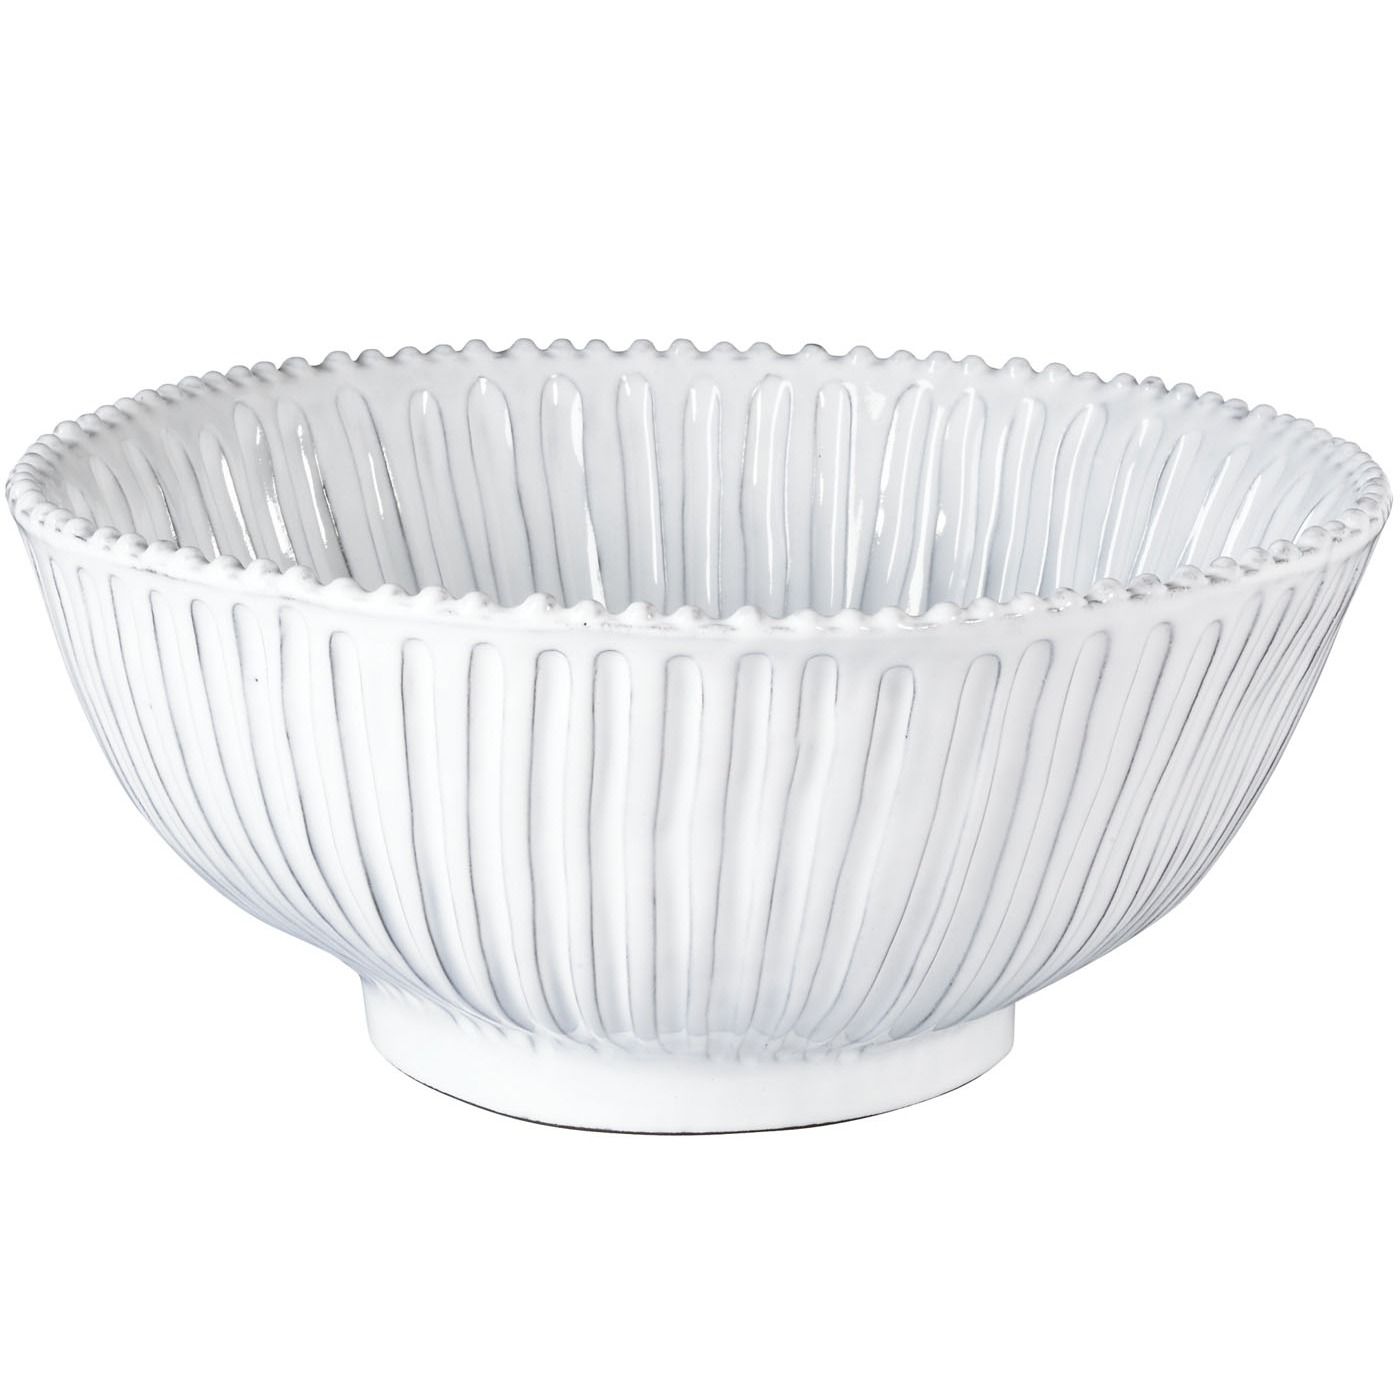 Vietri Incanto Stripe Serving Bowl